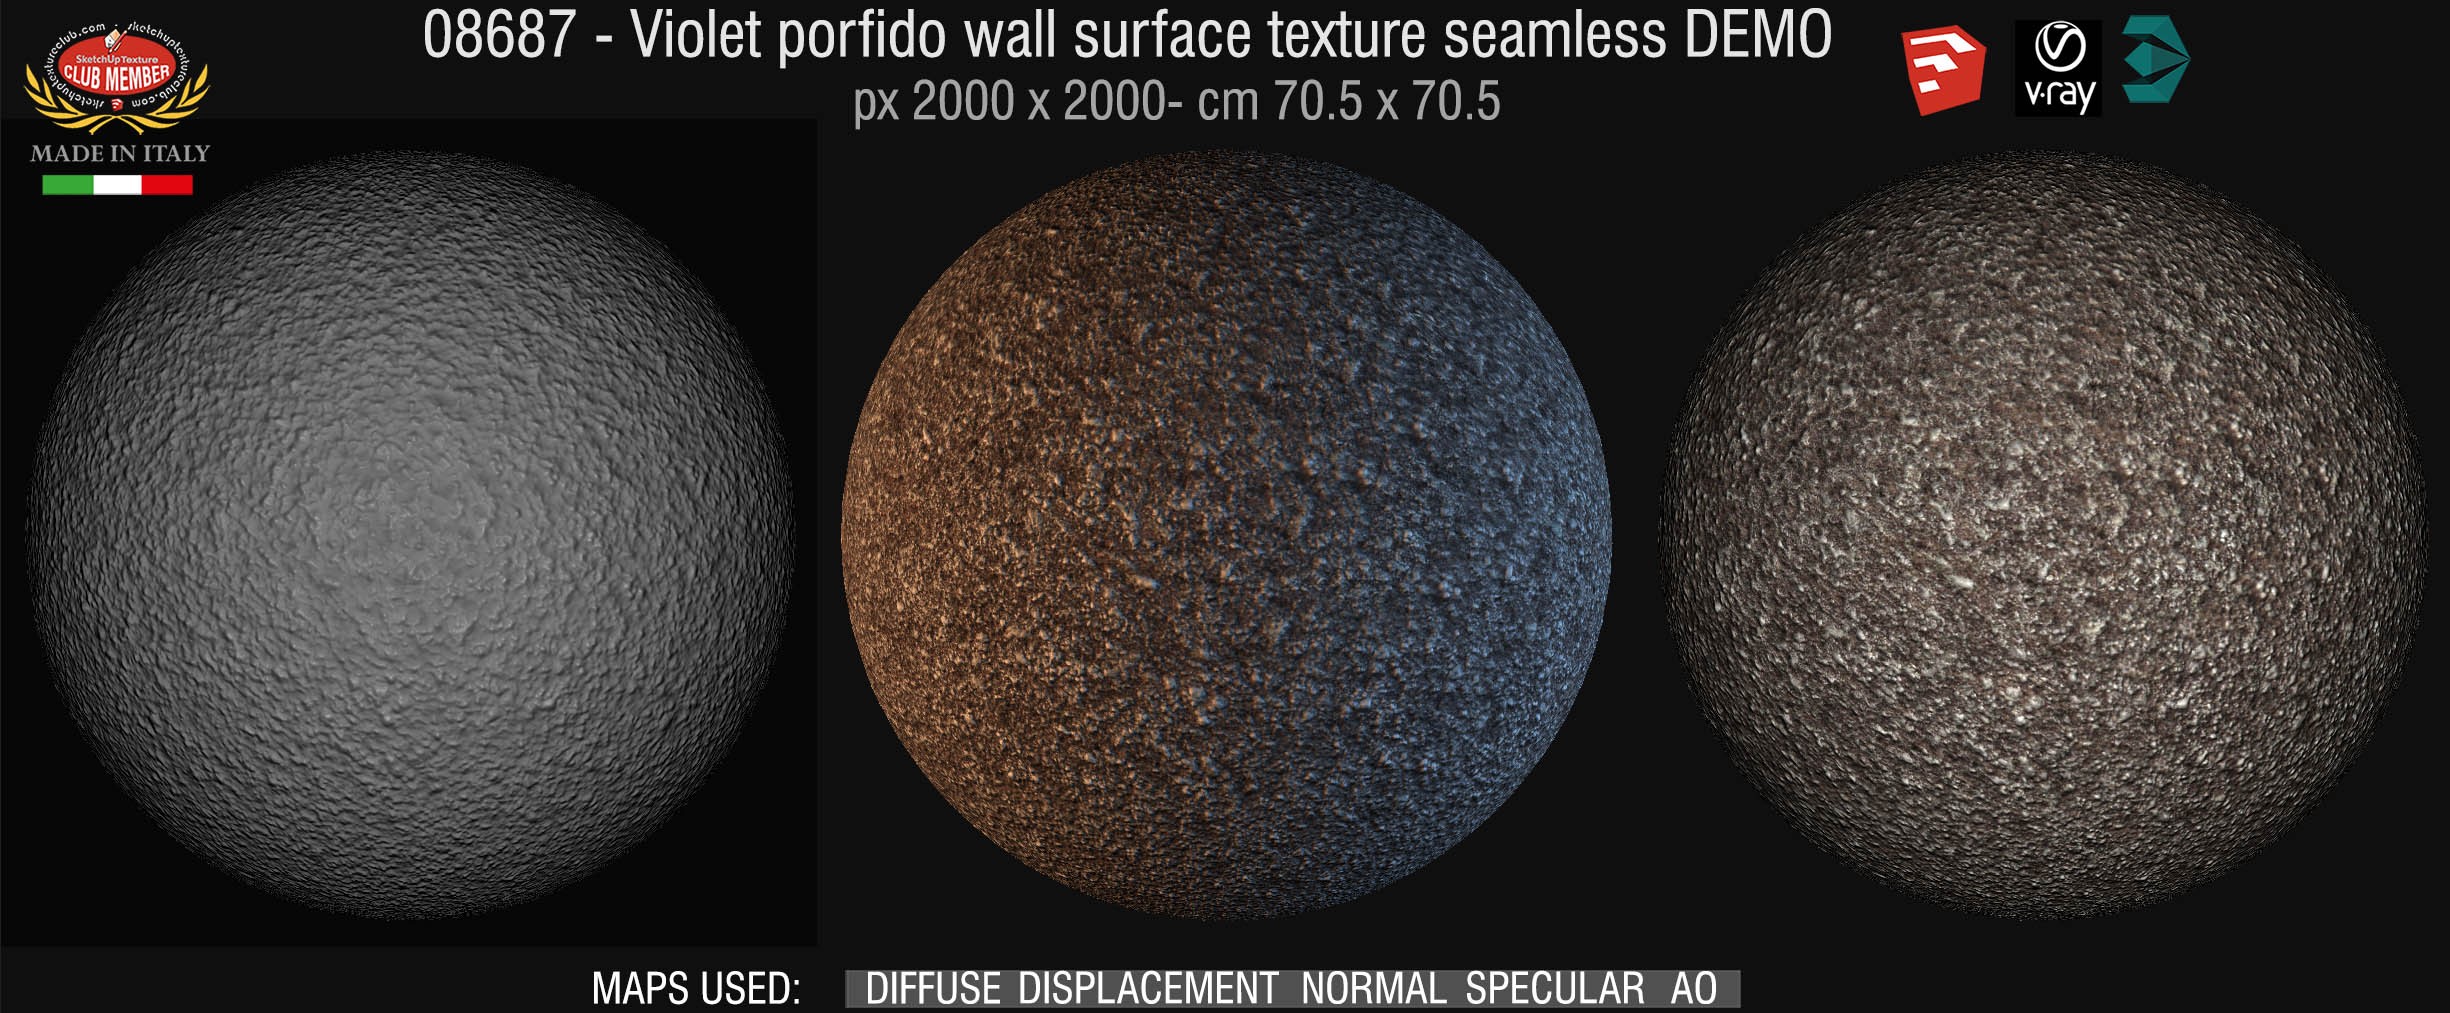 08687 Violet porfido wall surface texture seamless + maps DEMO